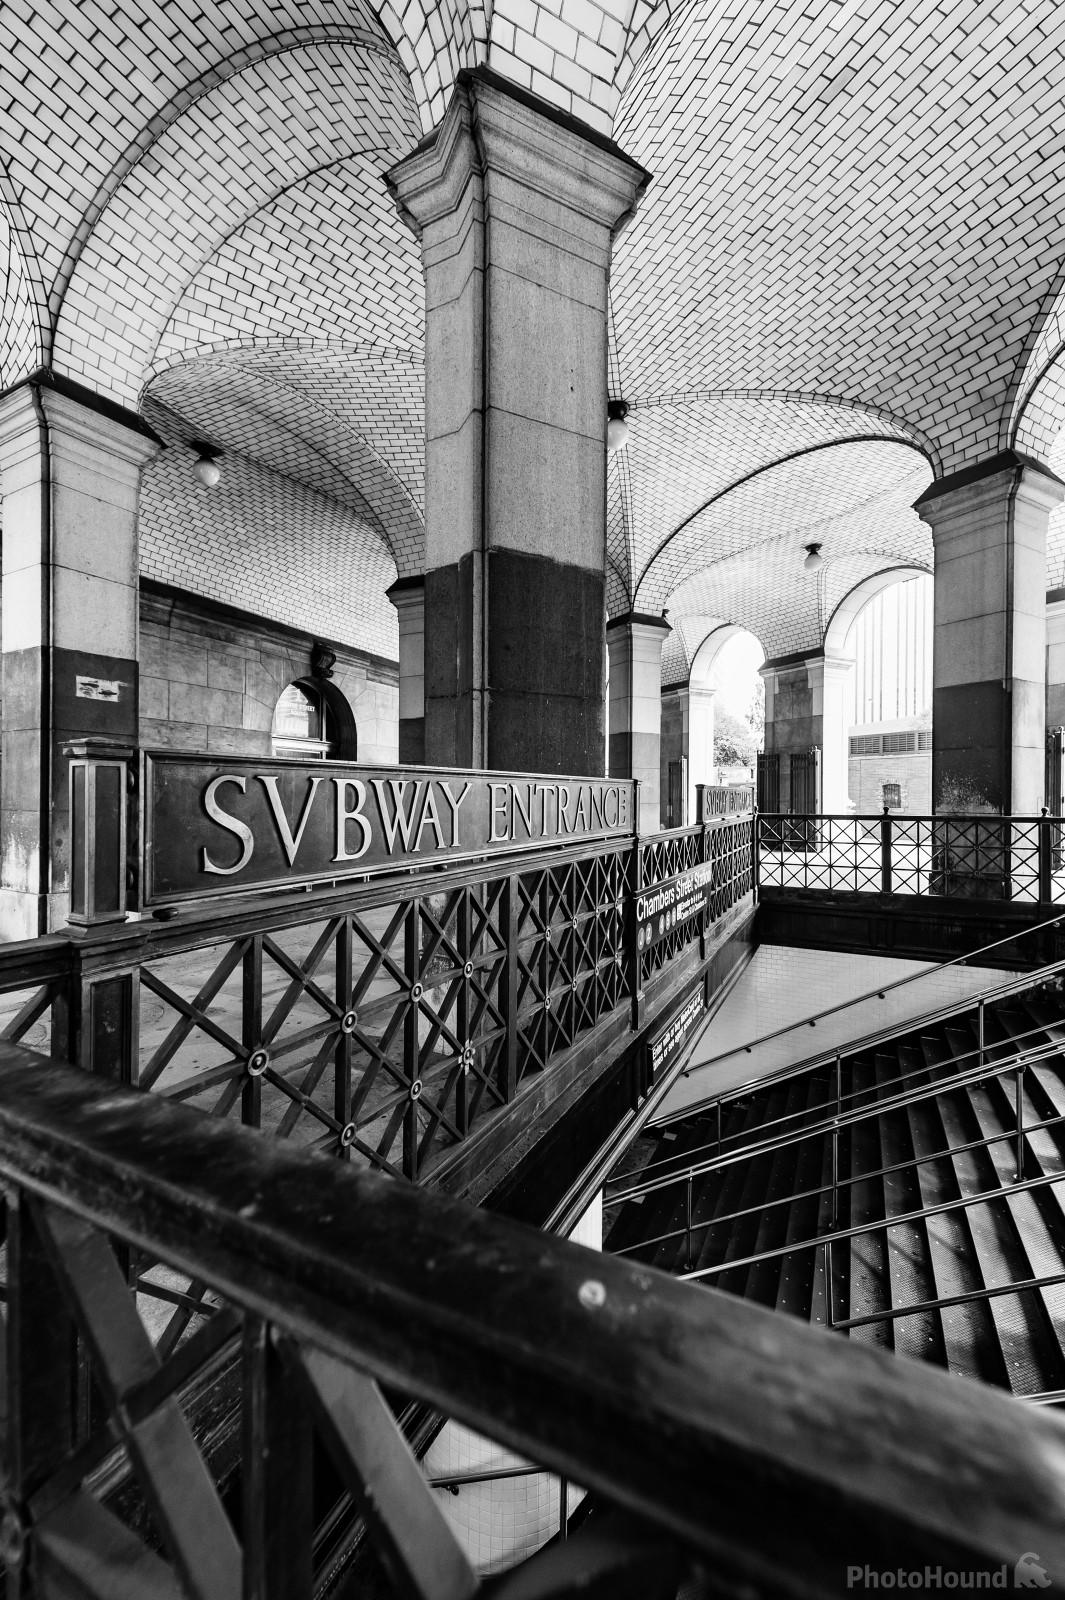 Image of Brooklyn Bridge City Hall Station - street entrance by VOJTa Herout